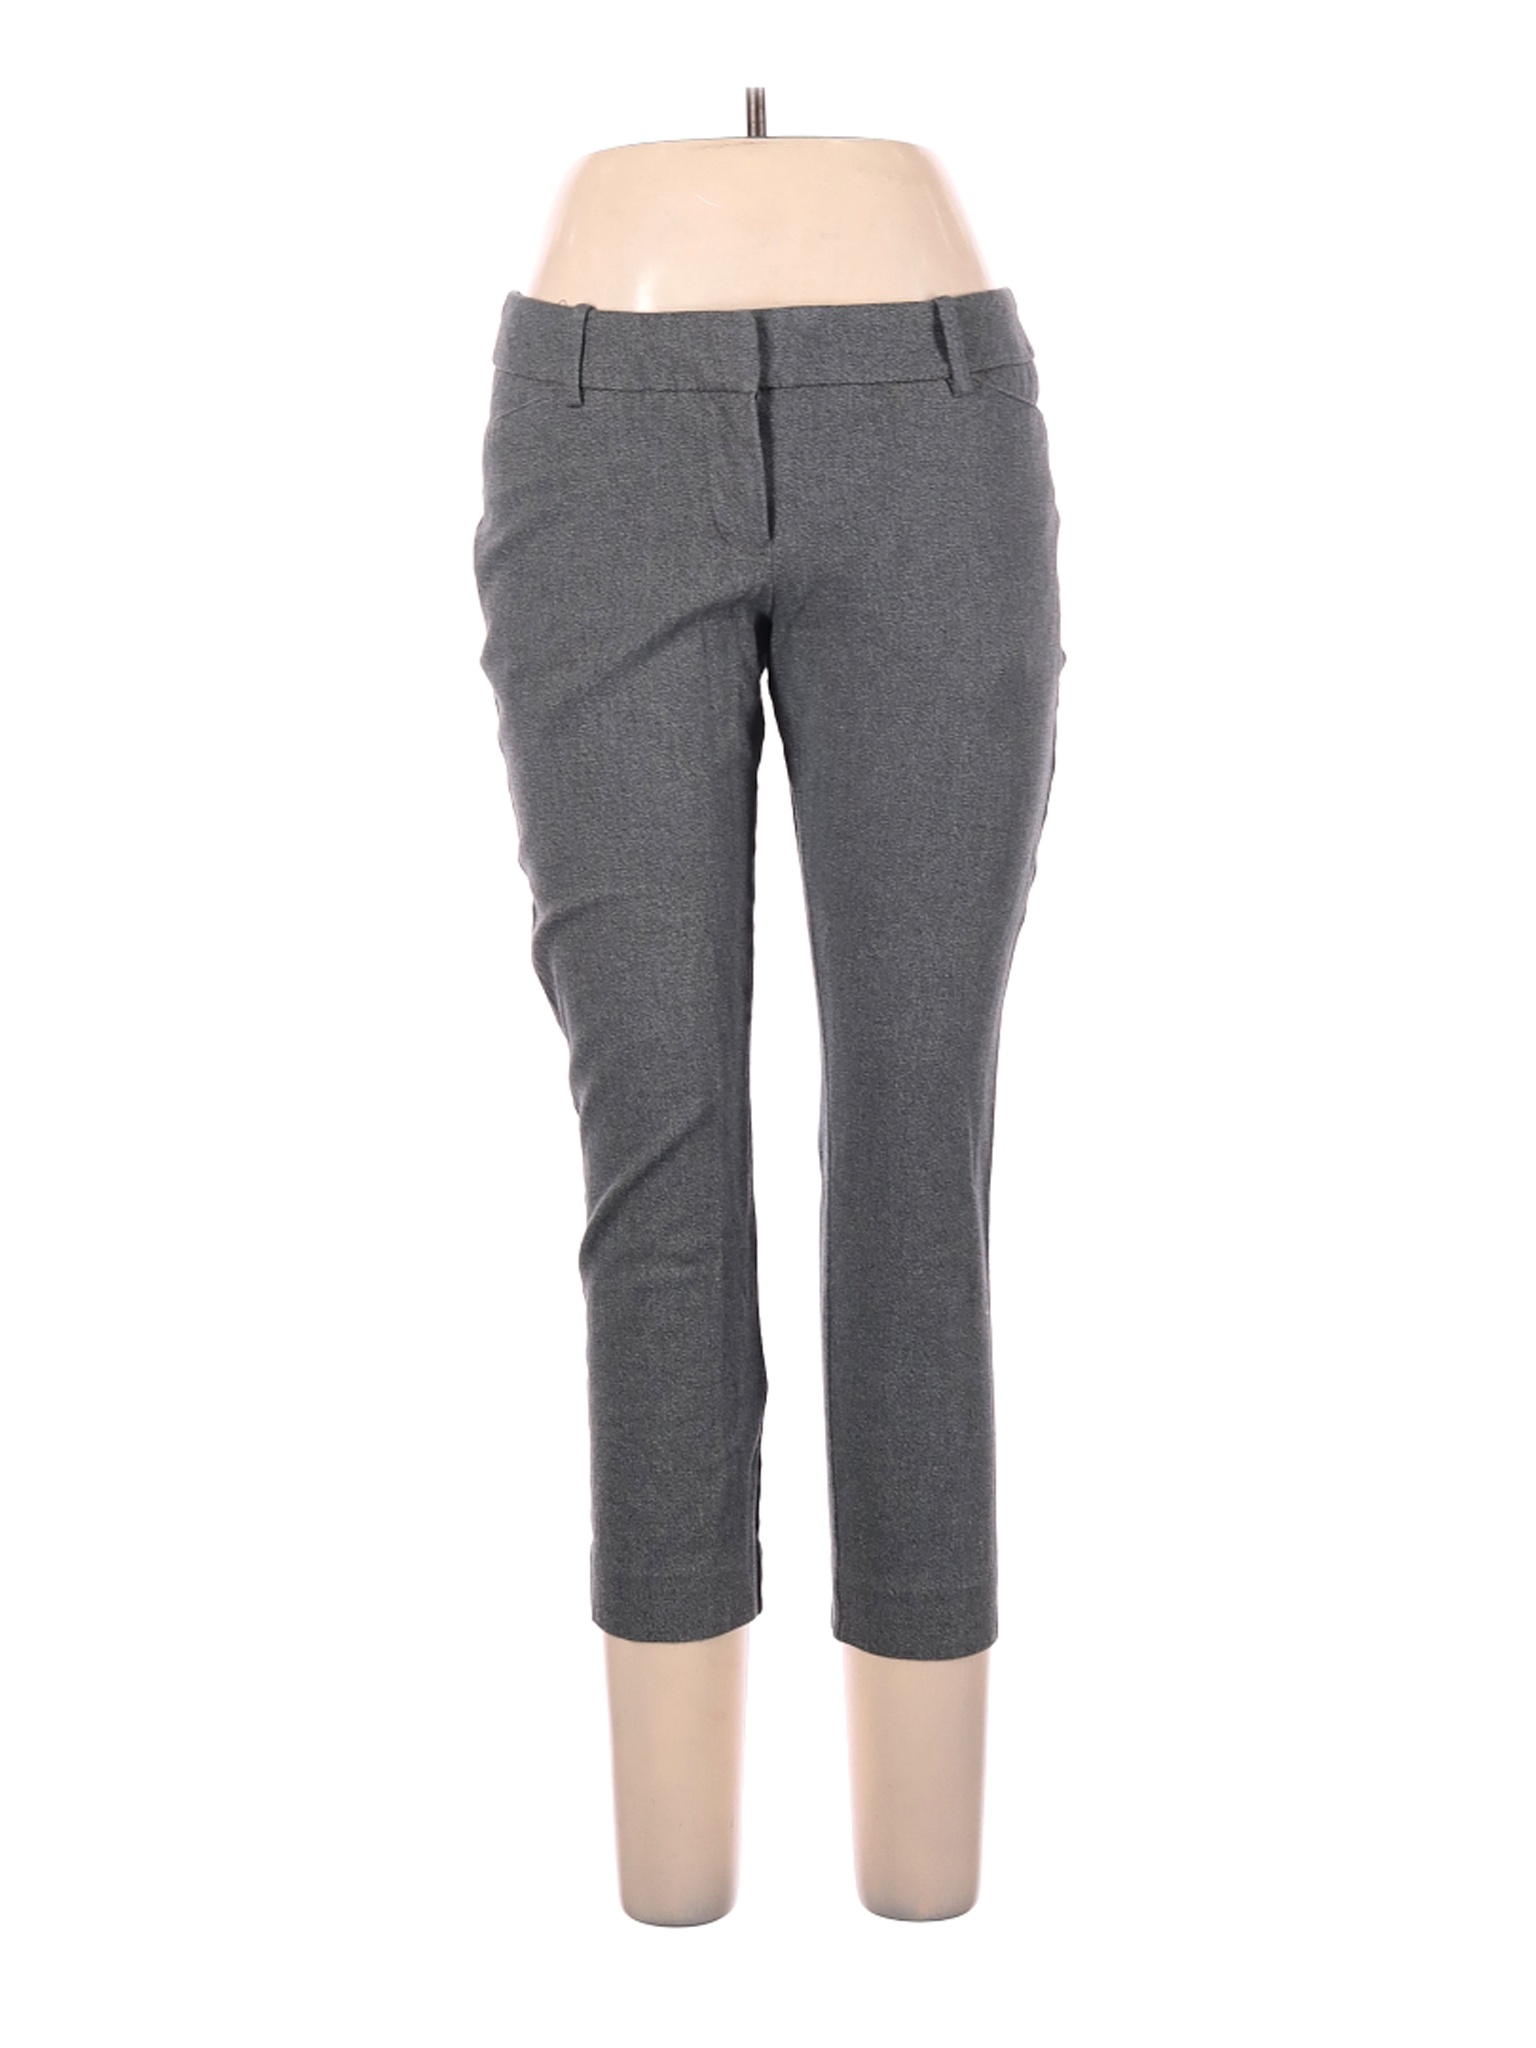 Mossimo Women Gray Dress Pants 10 | eBay